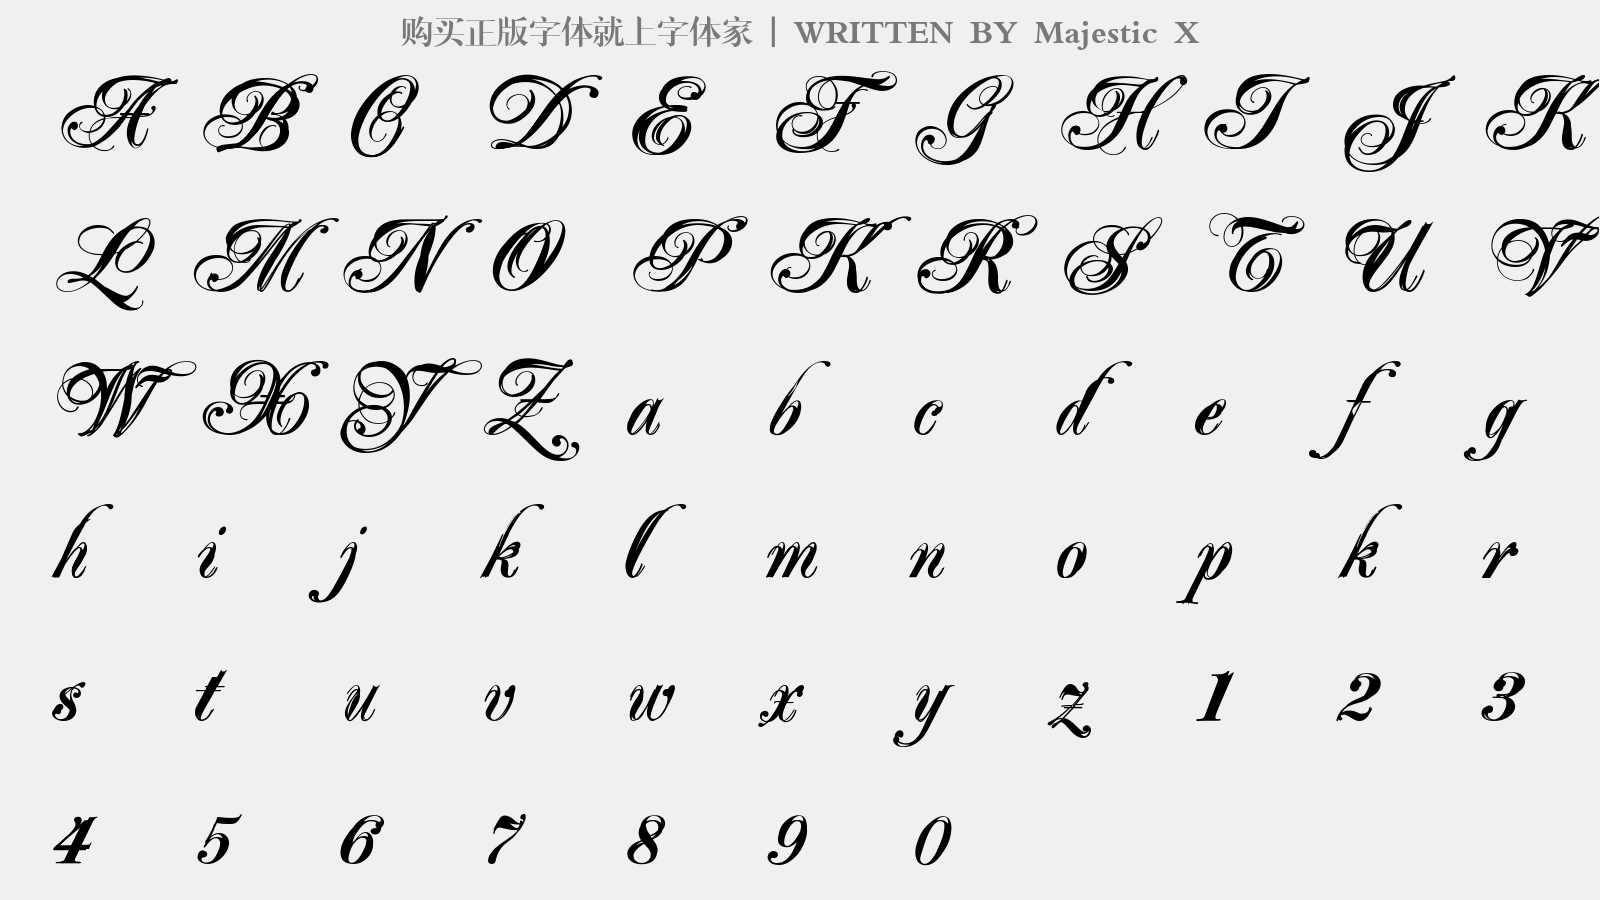 Majestic X - 大写字母/小写字母/数字